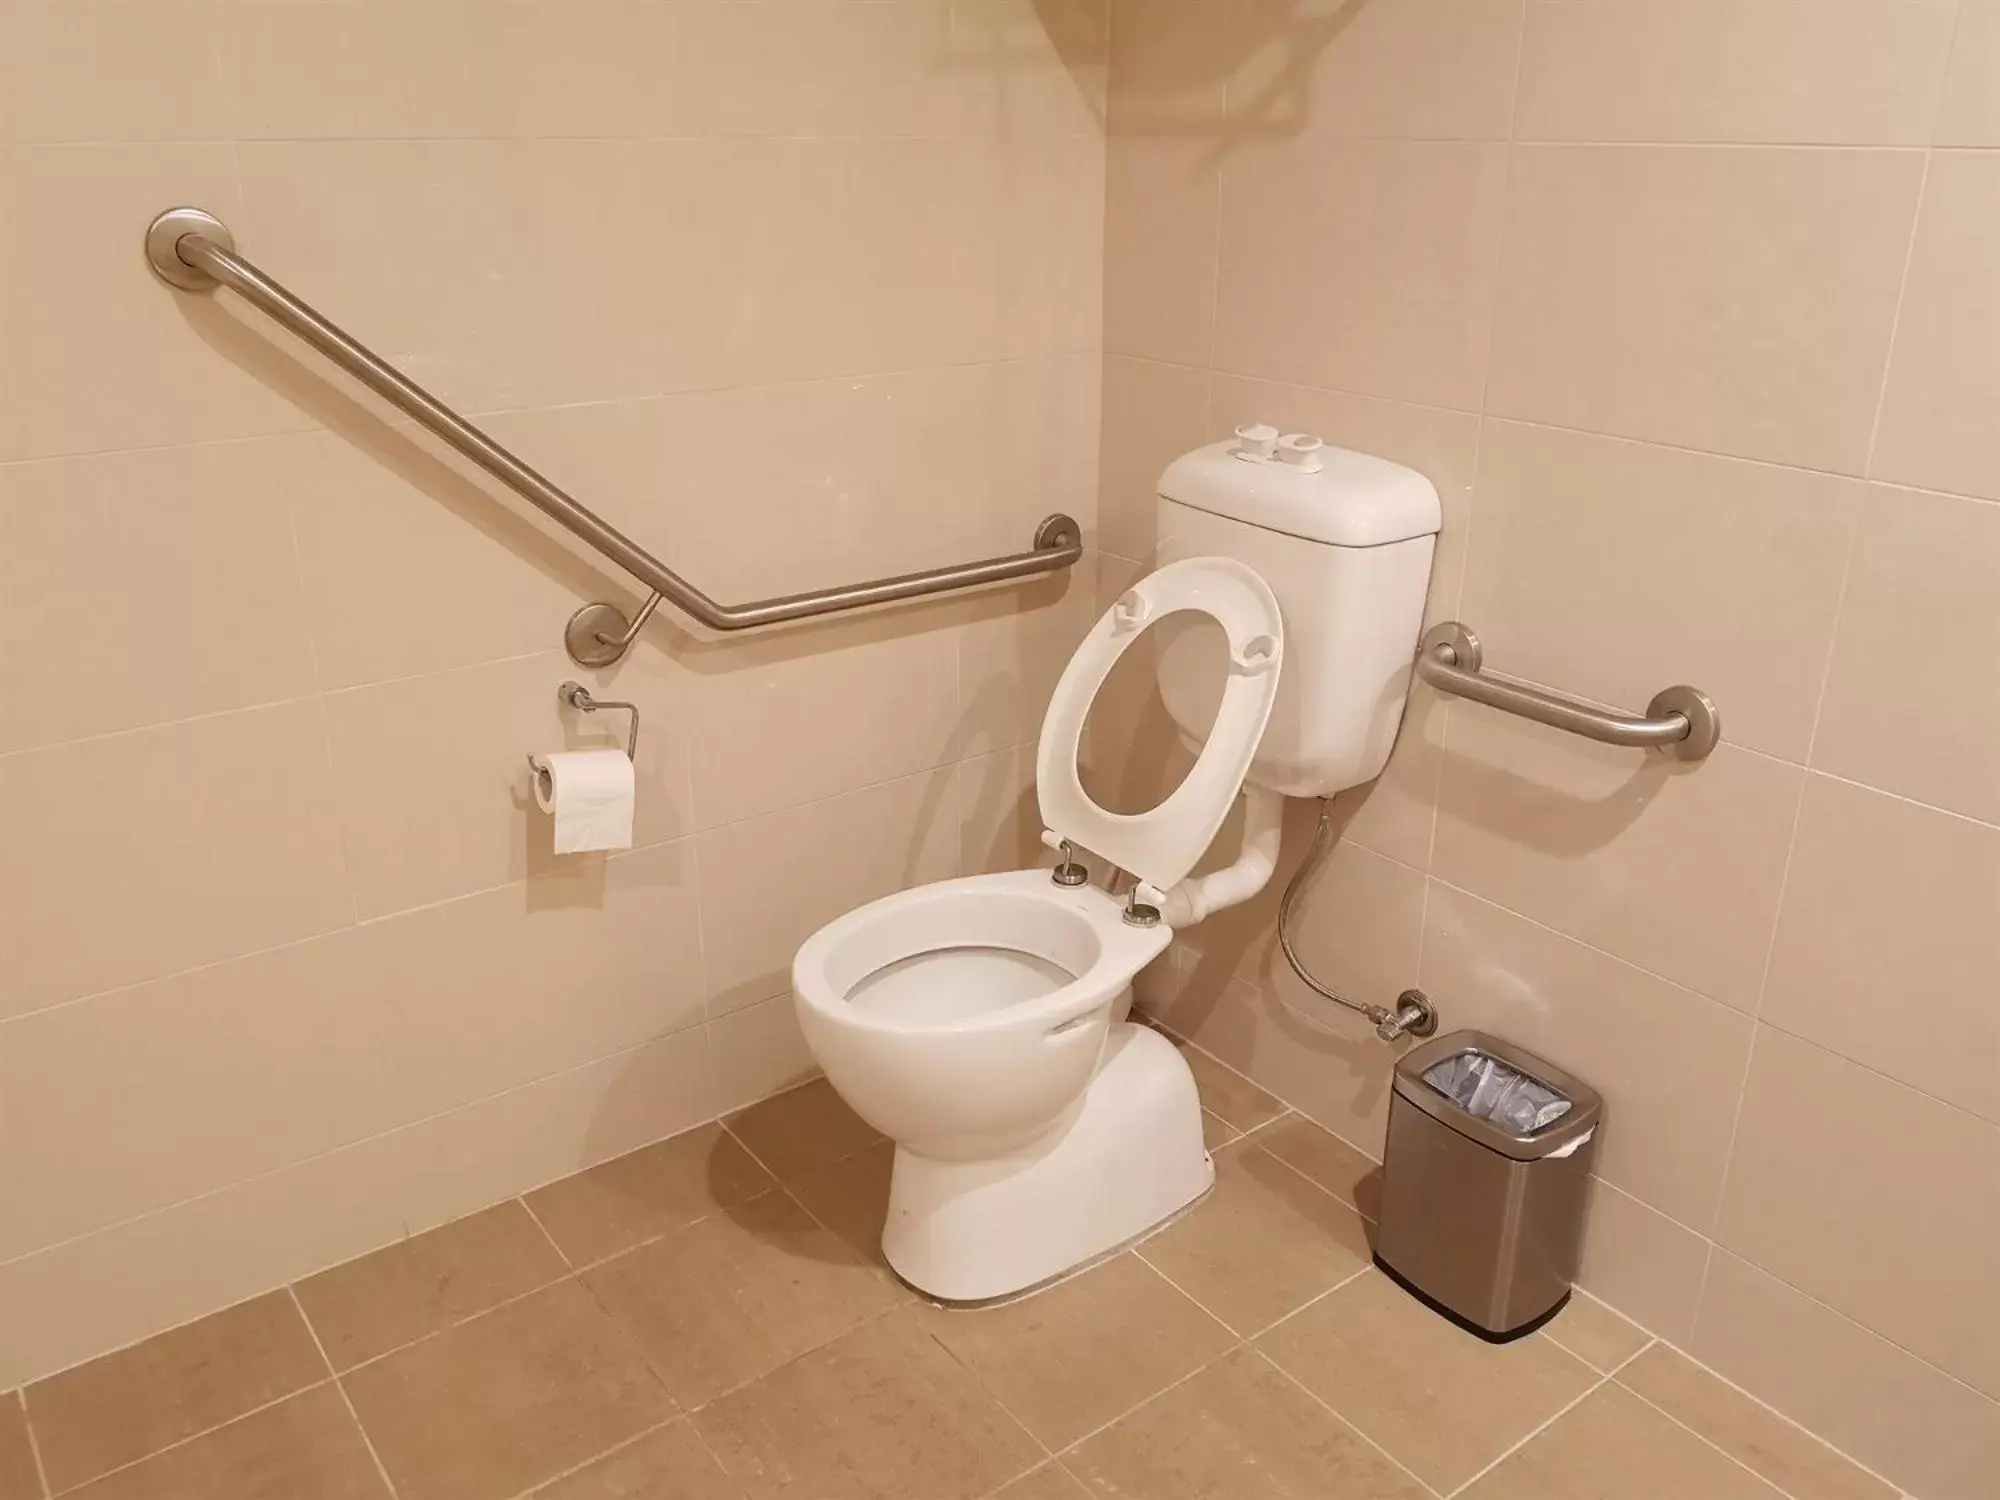 Facility for disabled guests, Bathroom in Bunbury Hotel Koombana Bay